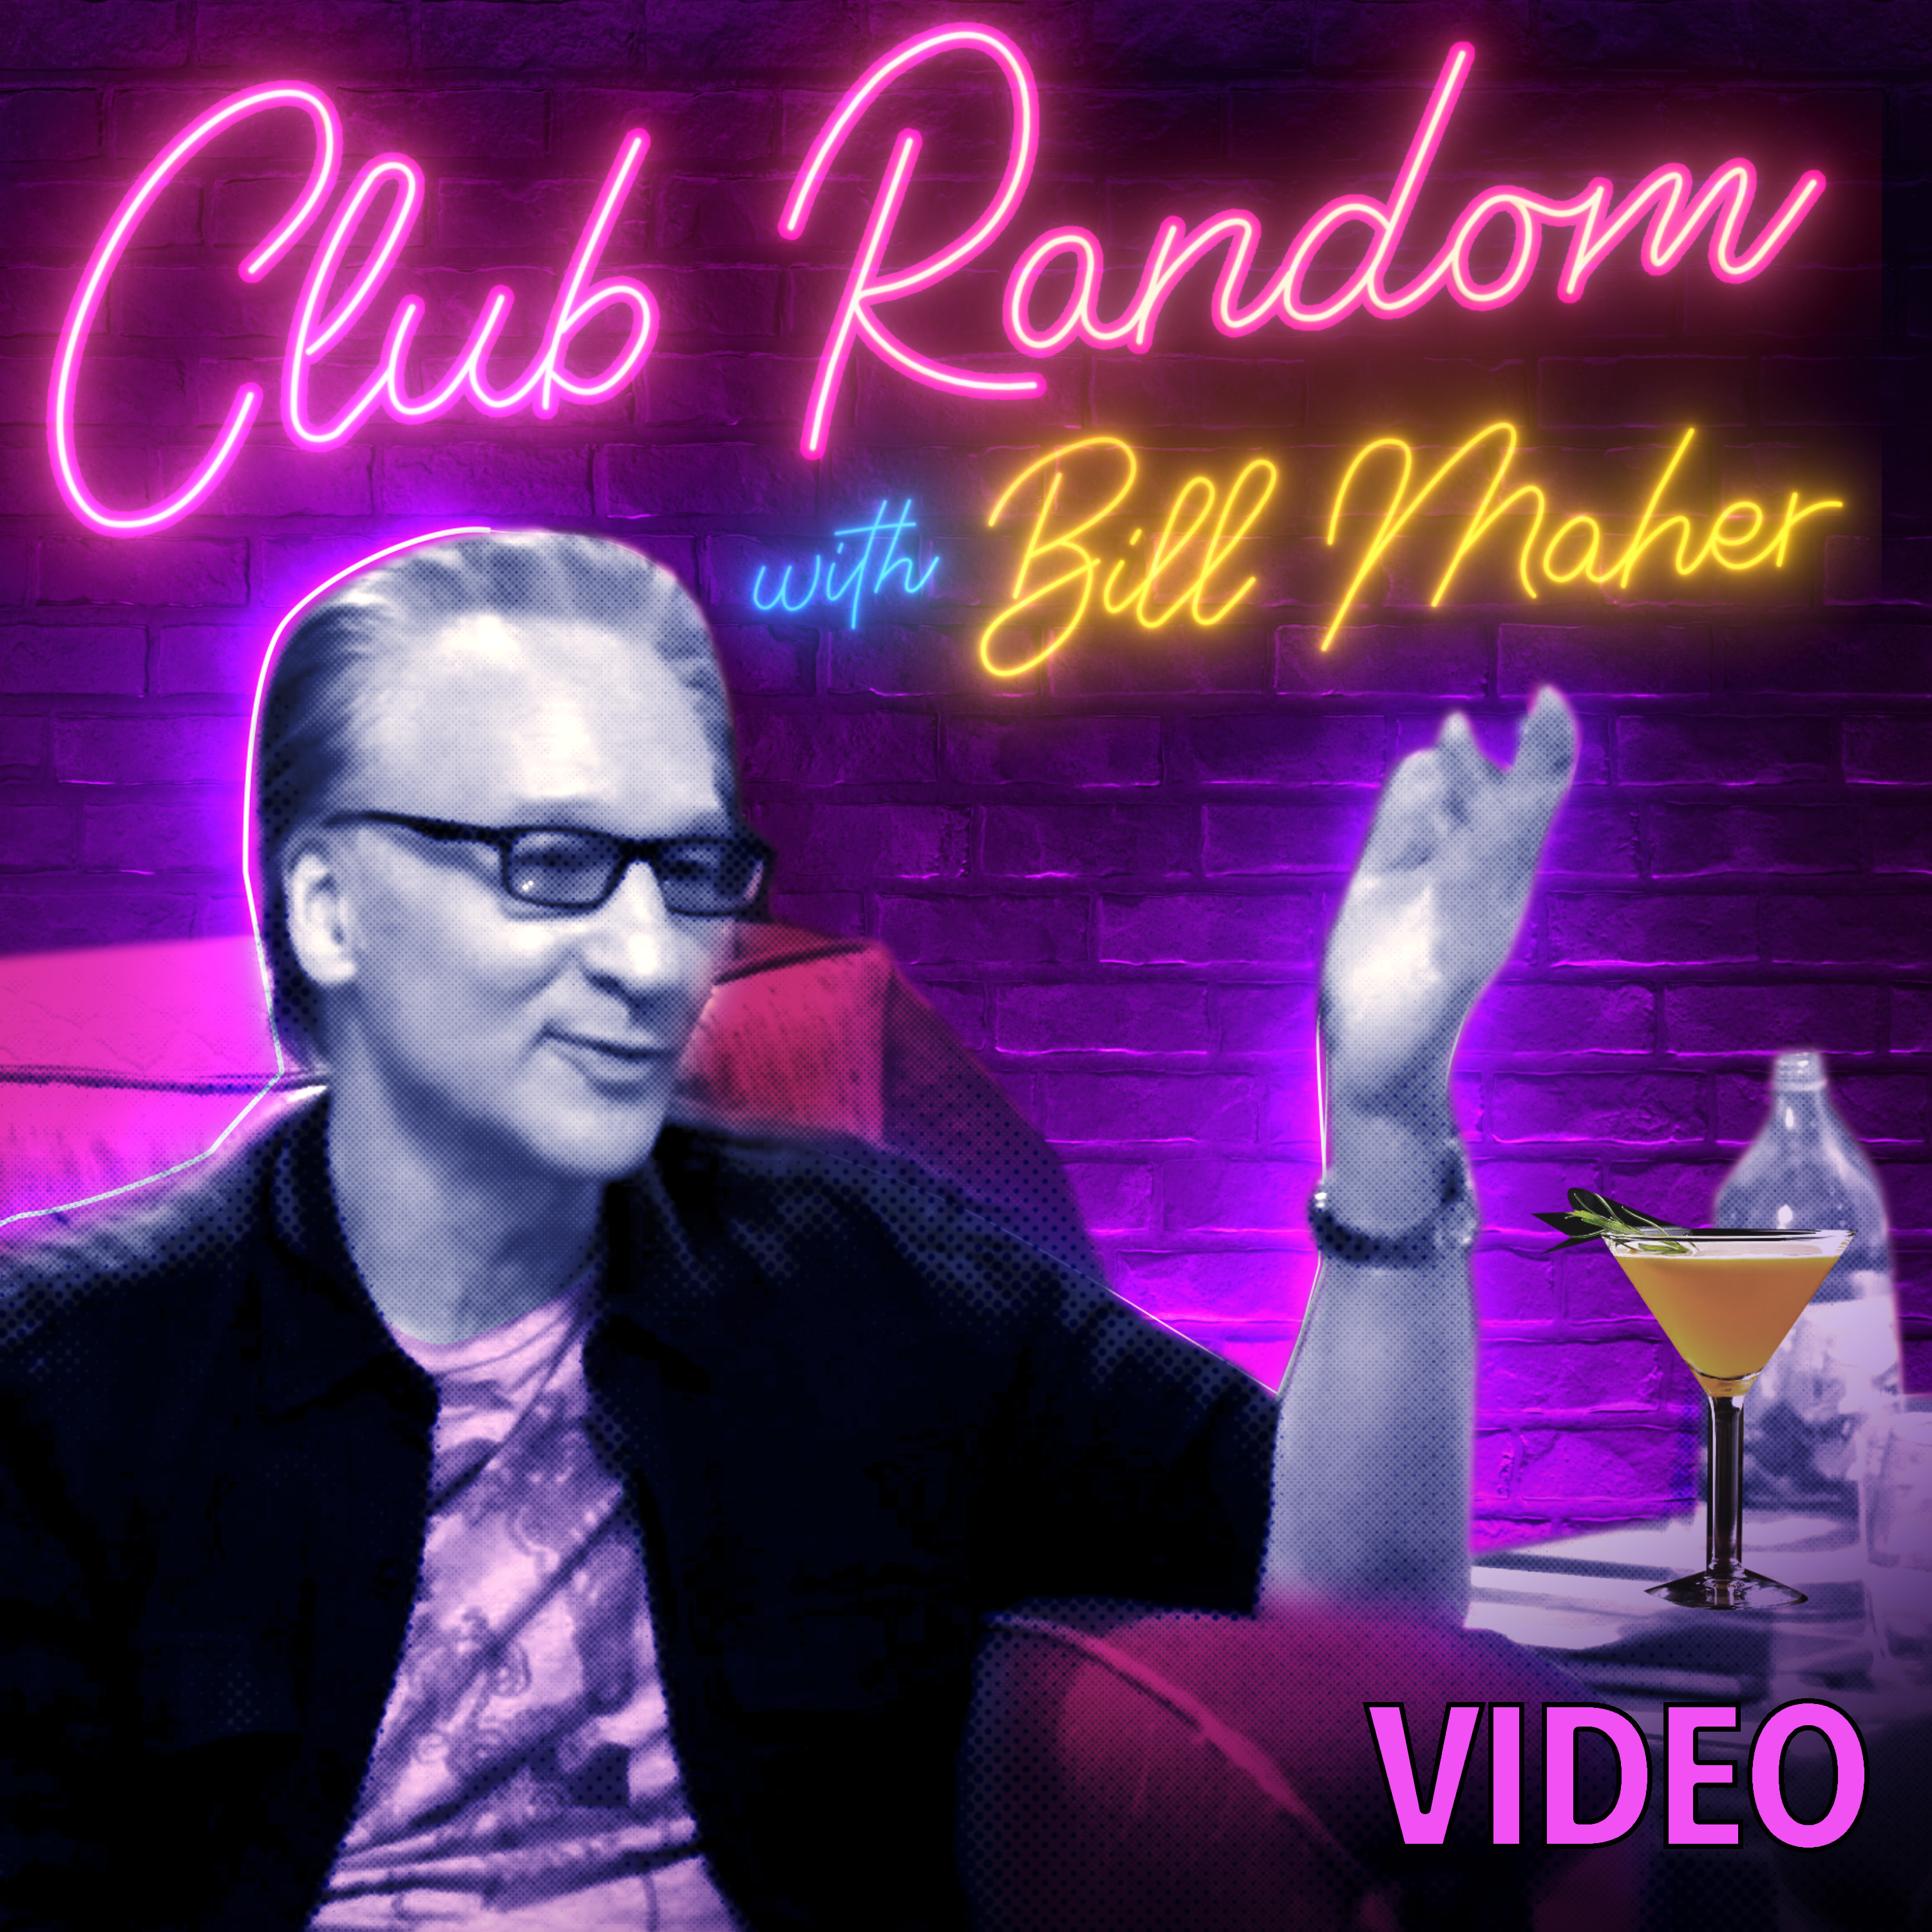 Video: Sheryl Crow | Club Random with Bill Maher